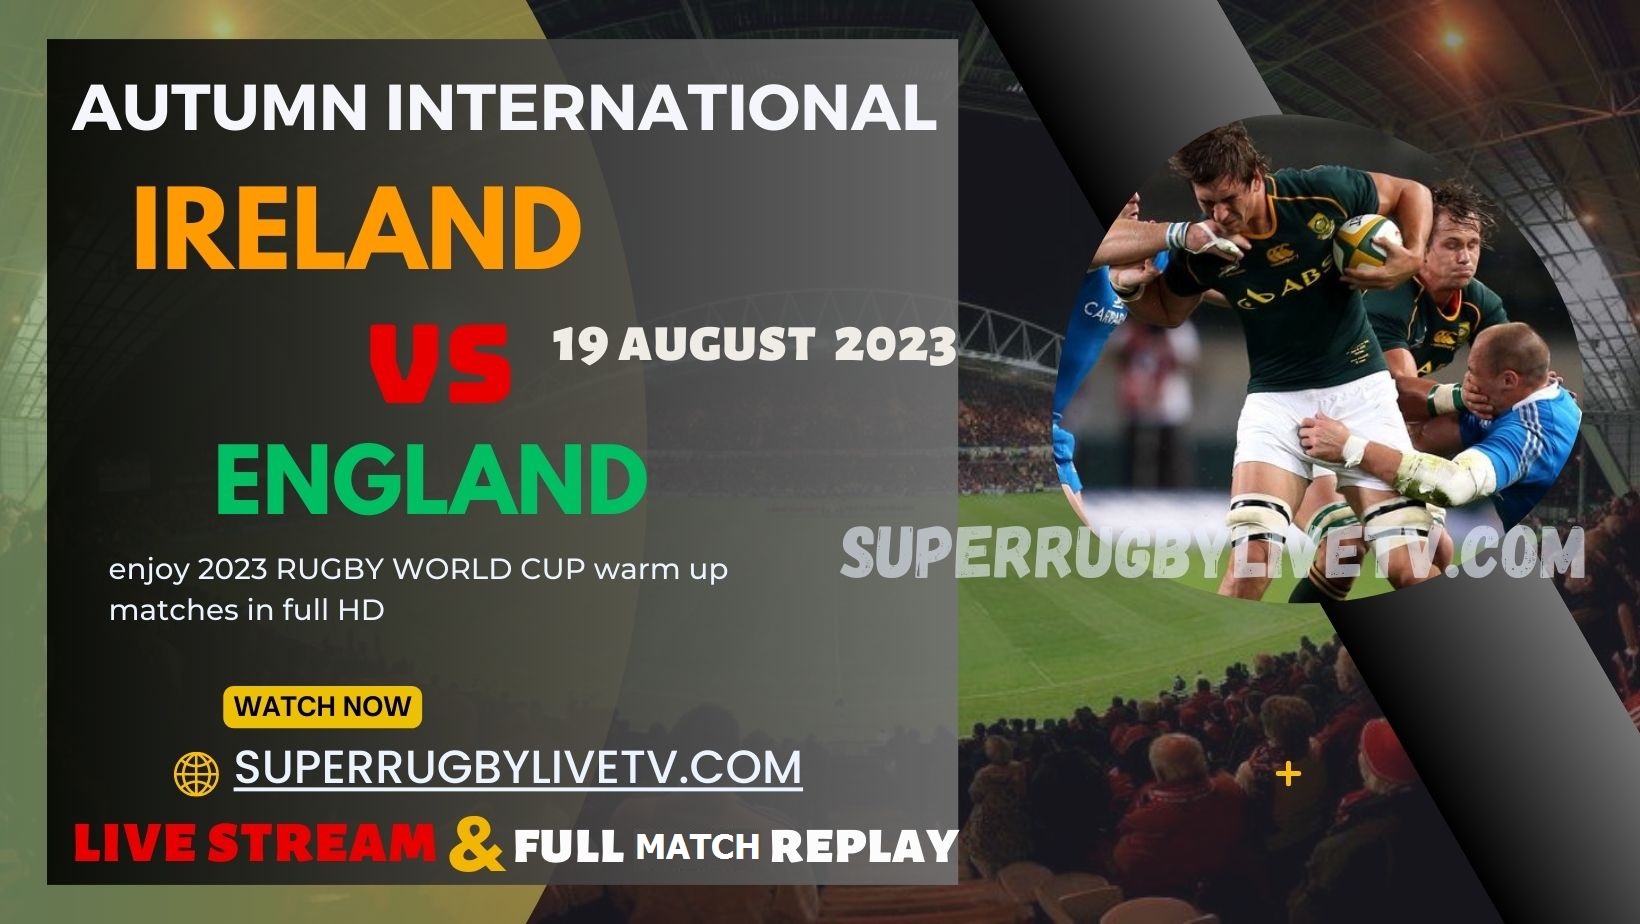 ireland-vs-england-autumn-international-rugby-live-stream